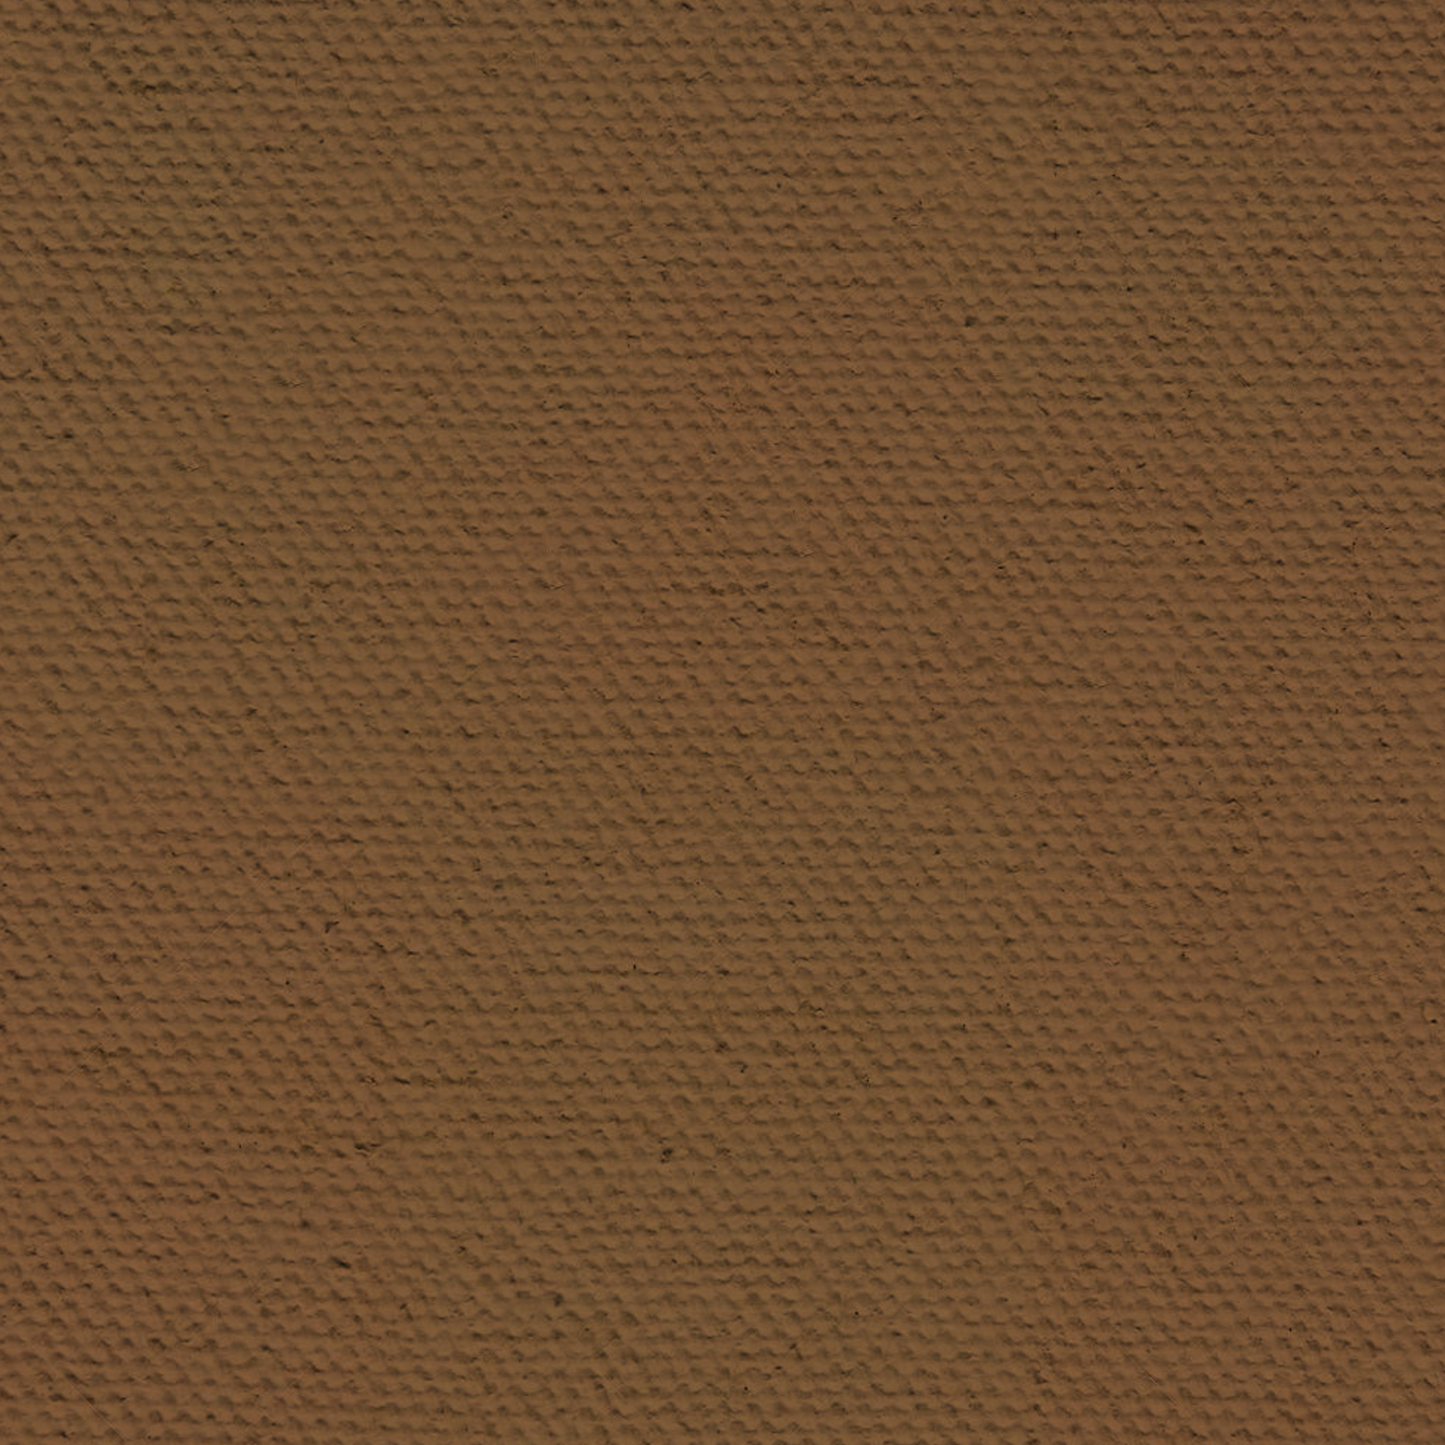 Brown 12oz Canvas - Standard Tote - Single Sided Screenprint